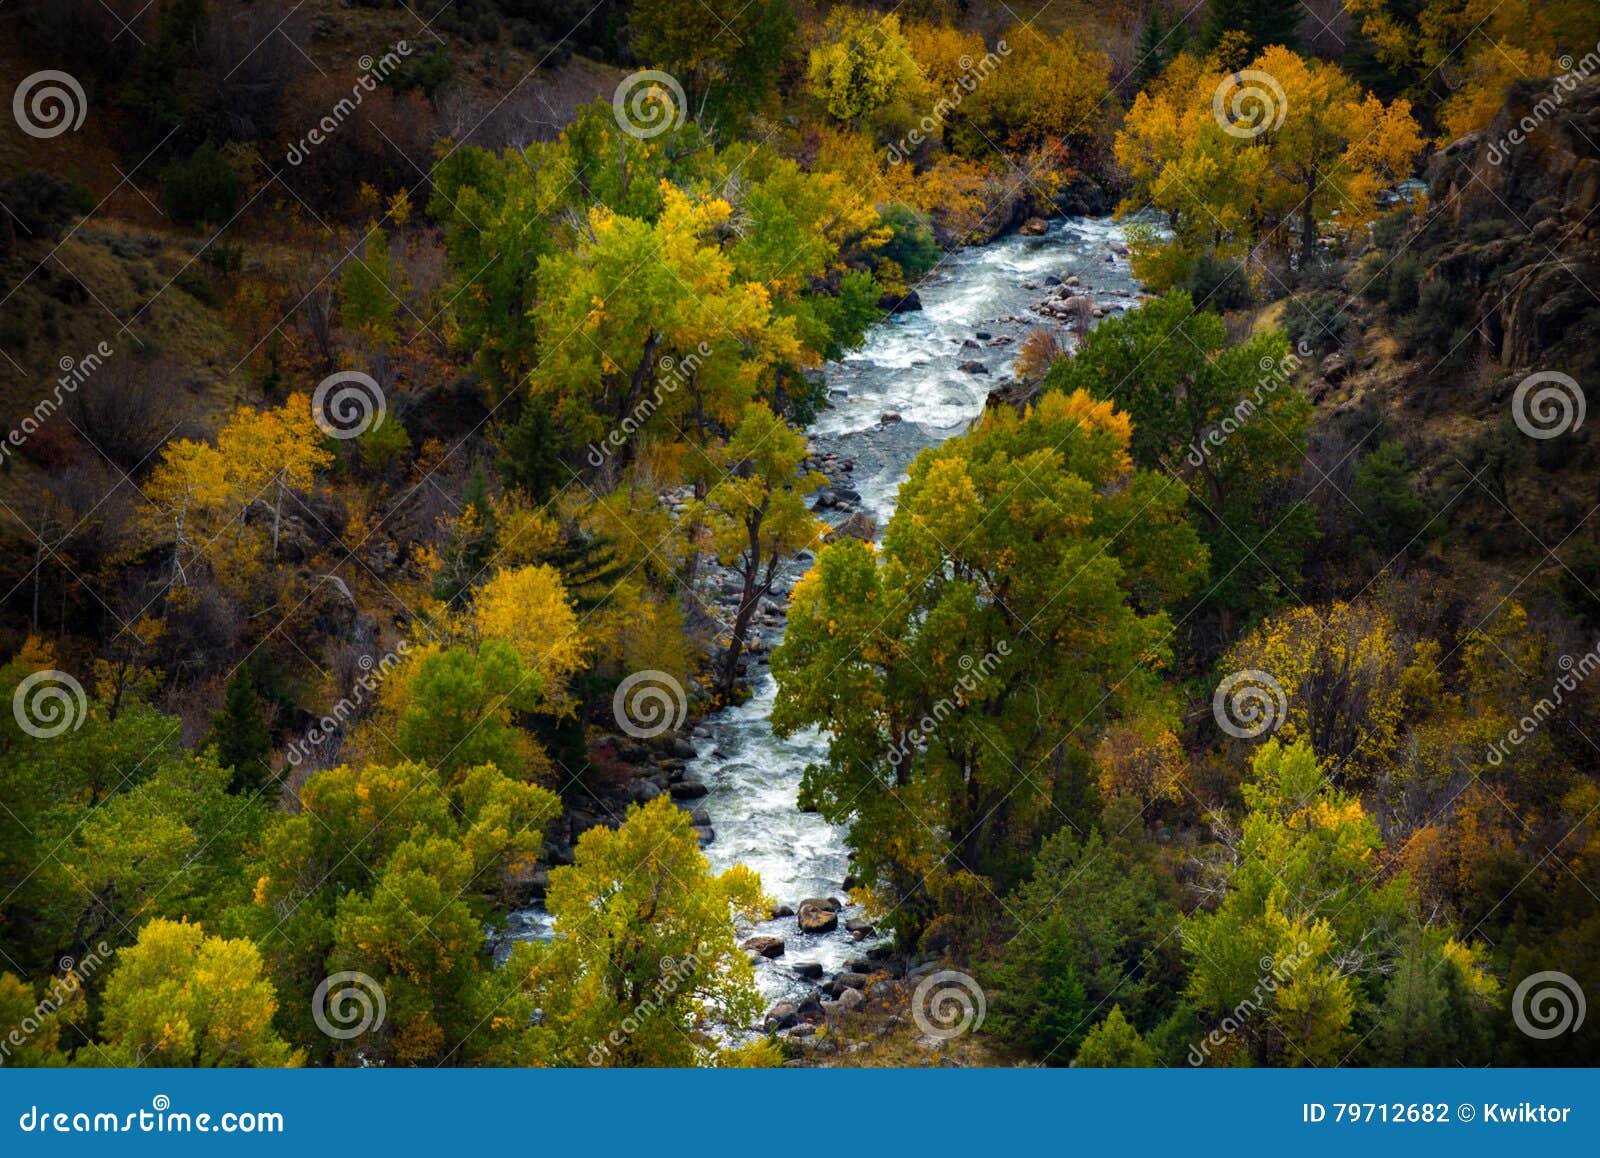 tensleep creek wyoming fall colors